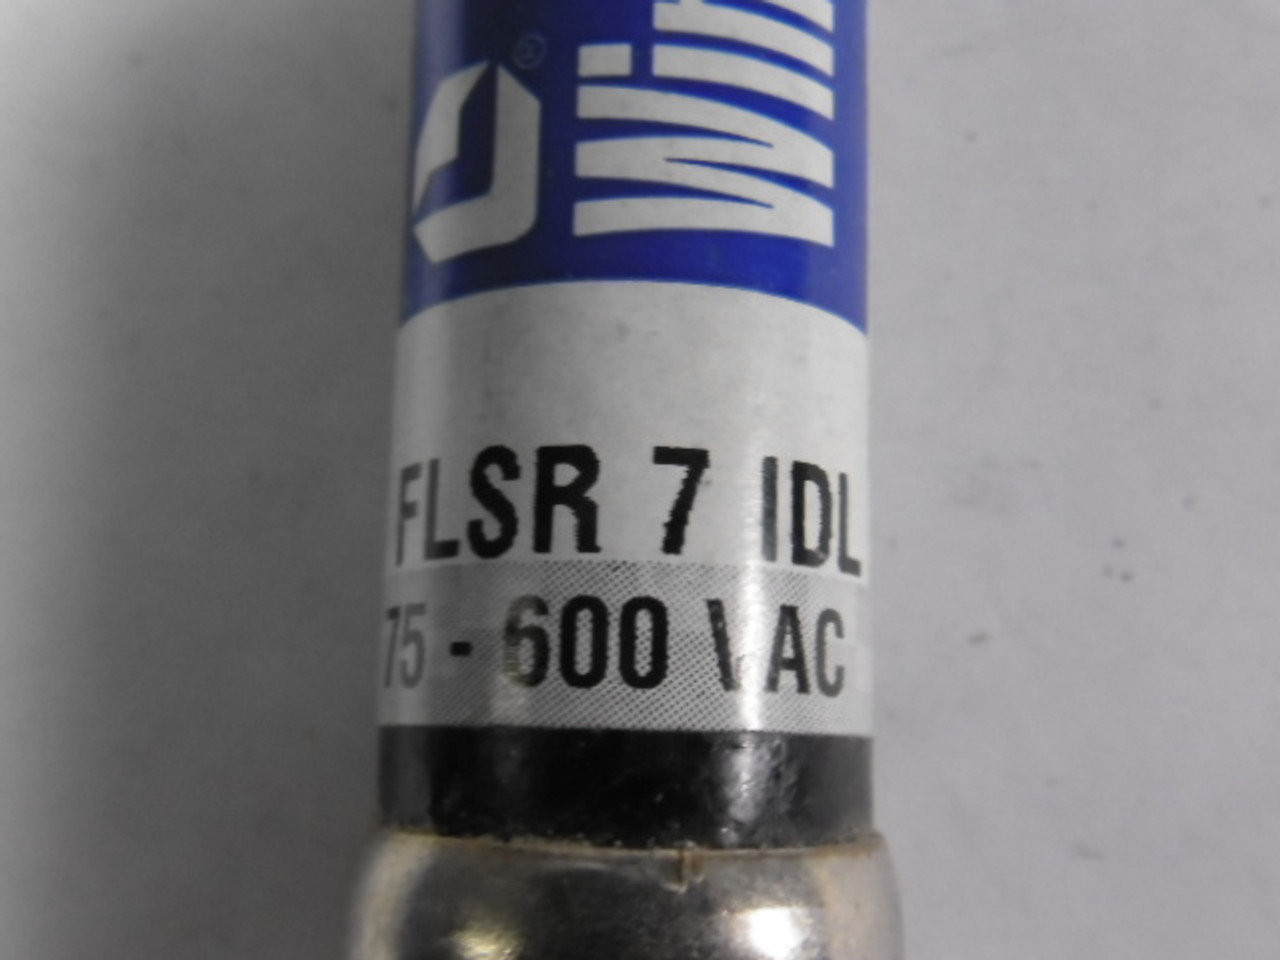 Lawson FLSR-7-IDL Time Delay Indicator Fuse 7A 75-600V USED